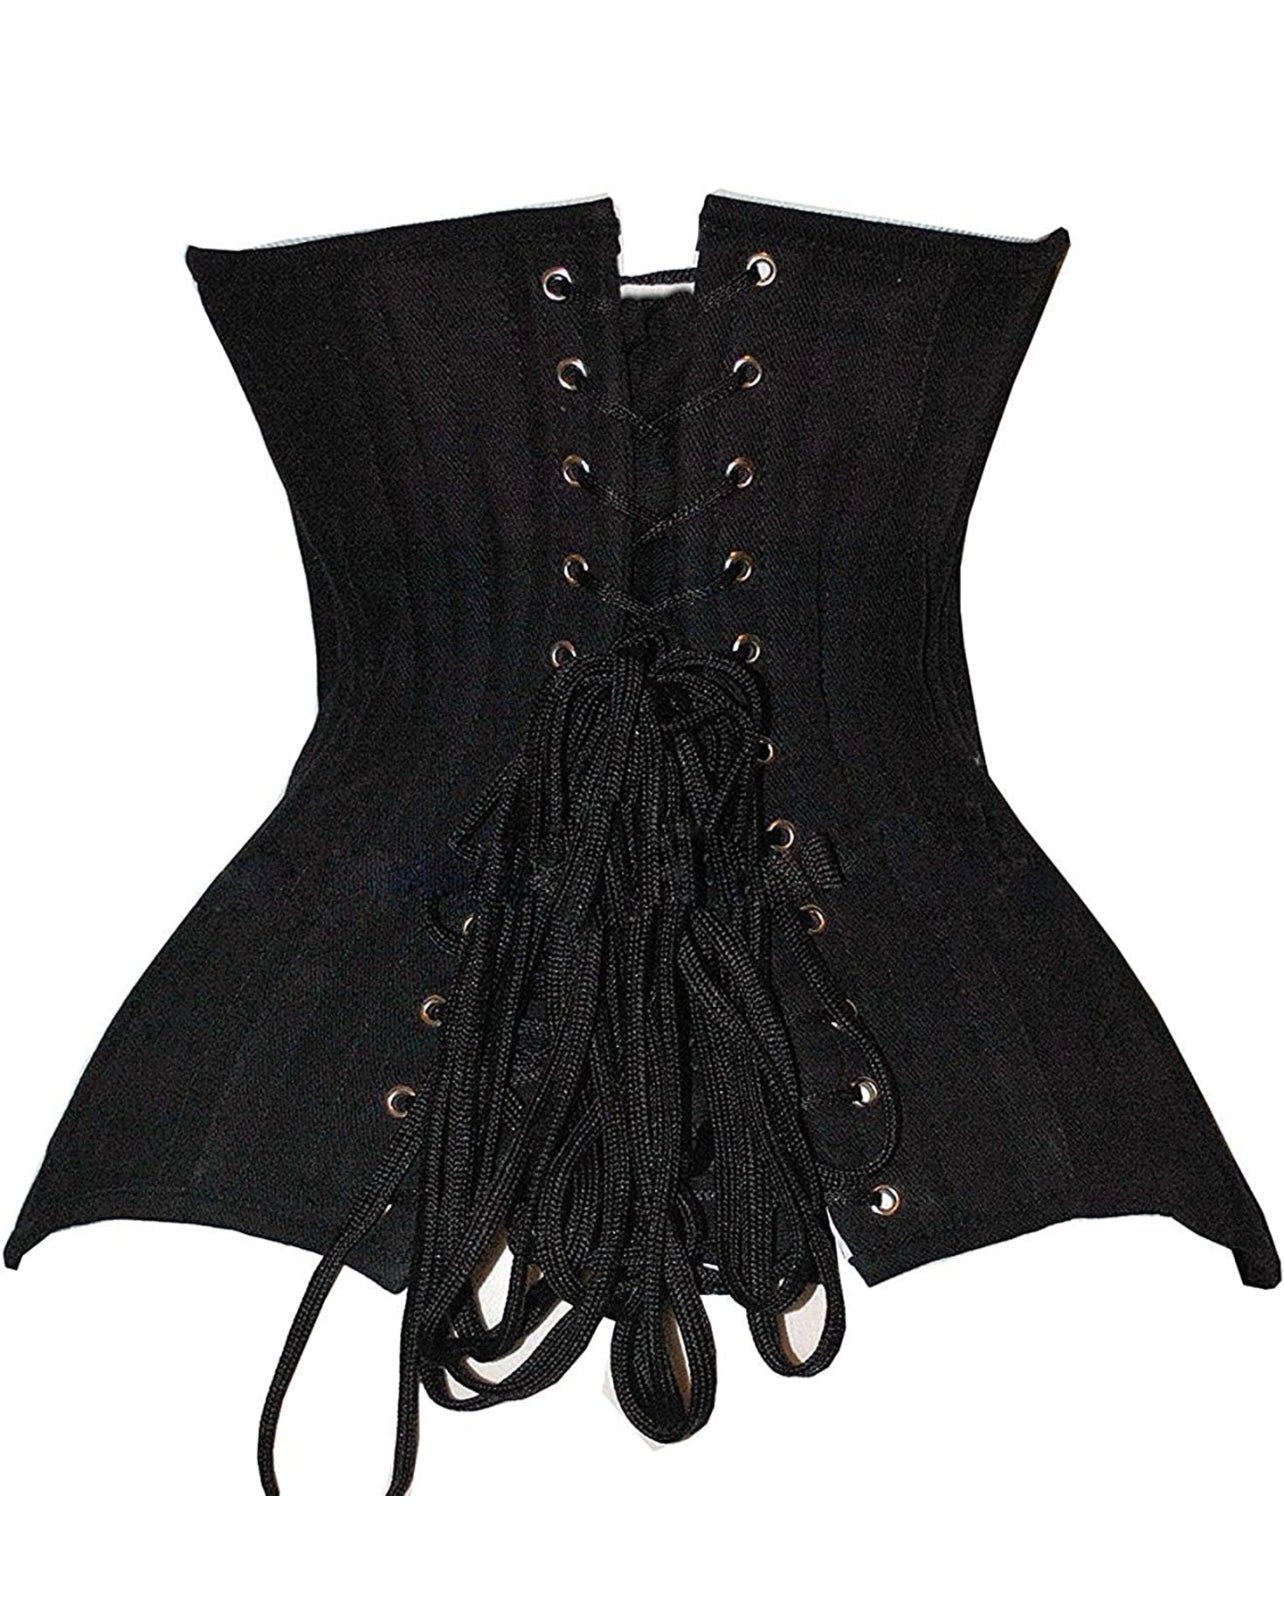 Hourglass (long torso) corset